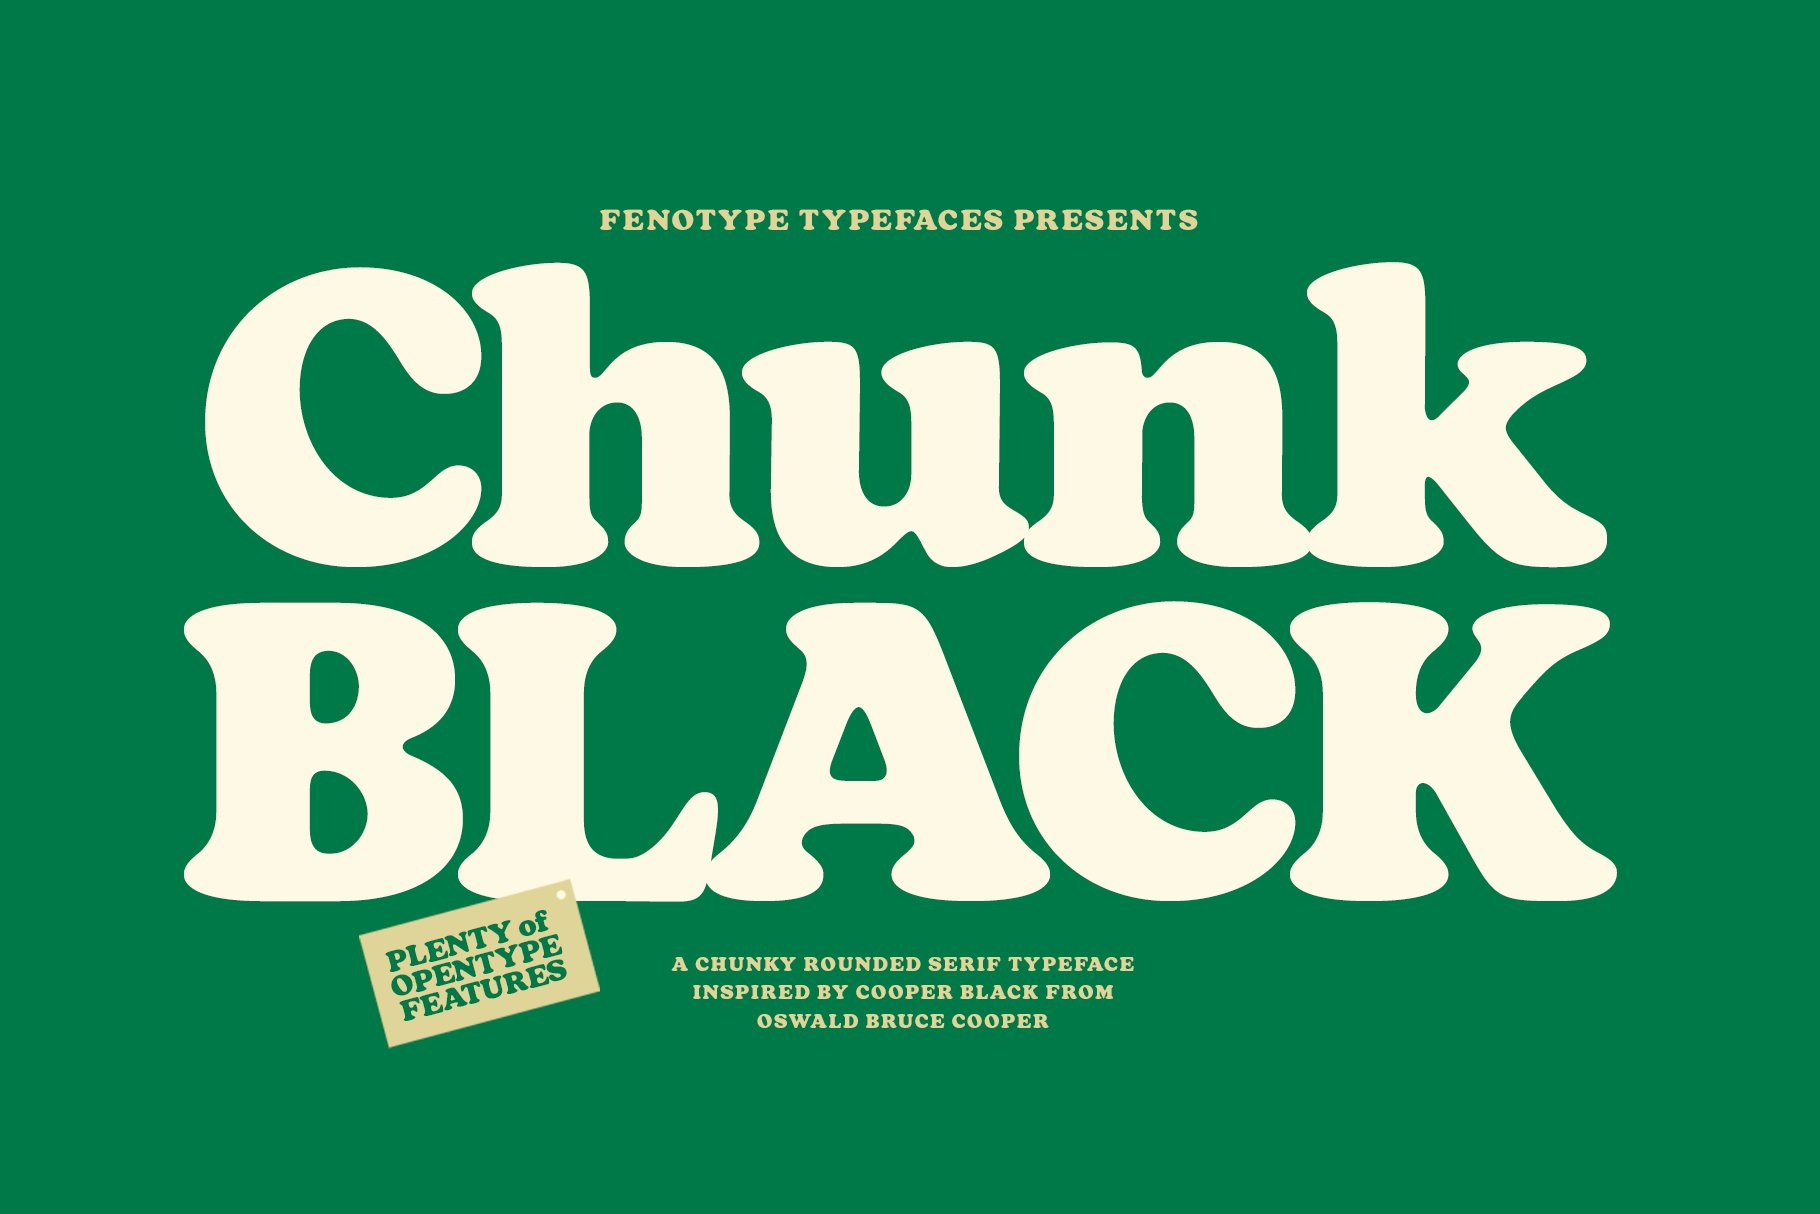 Chunk Black Retro Serif cover image.